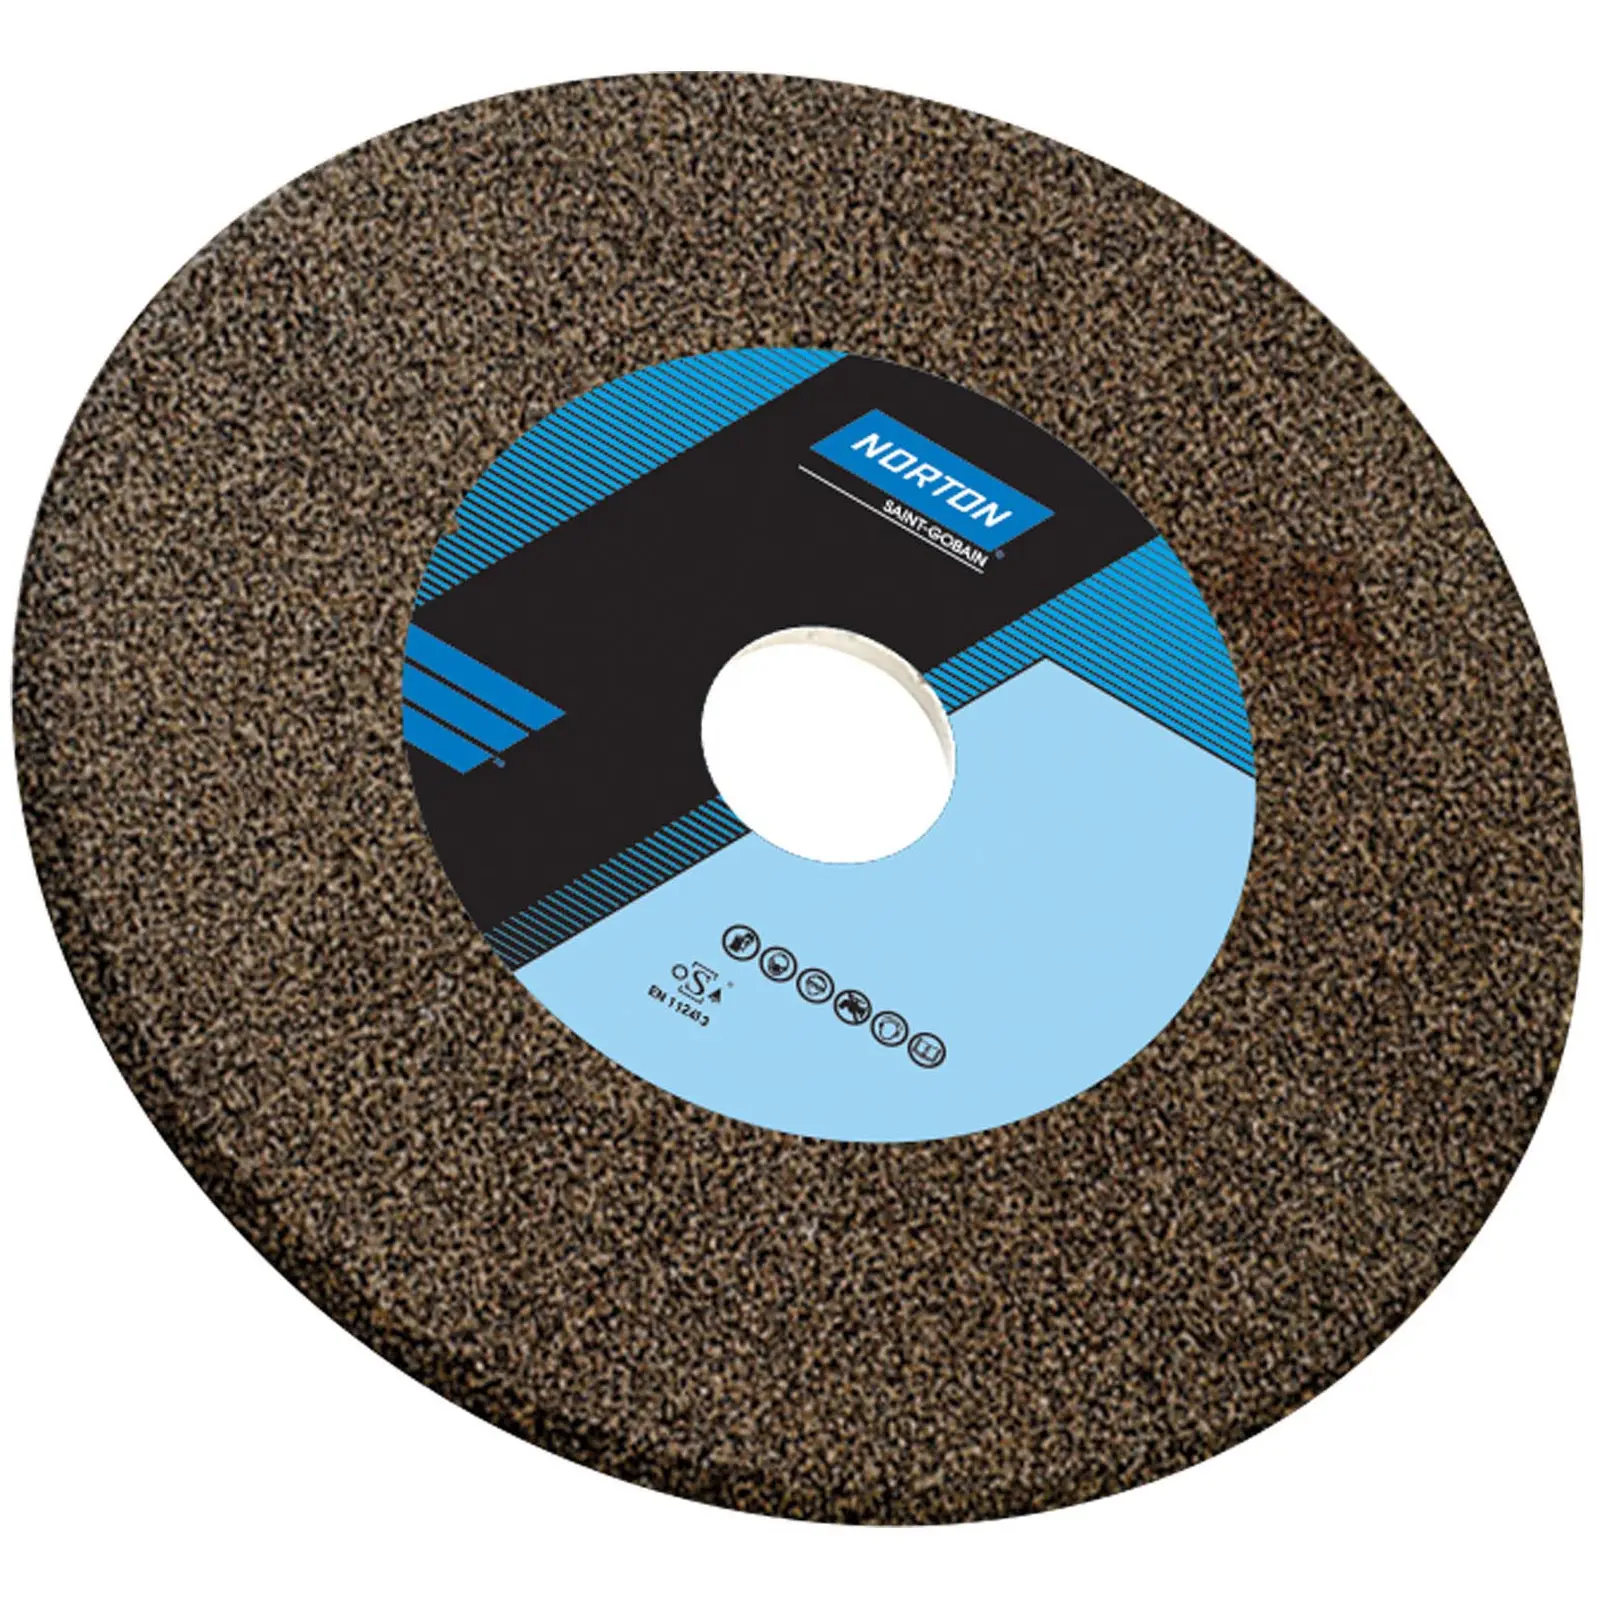 Grinding Wheel - Ø 200 mm - 36 grit - hardness grade K - corundum - 5 pieces